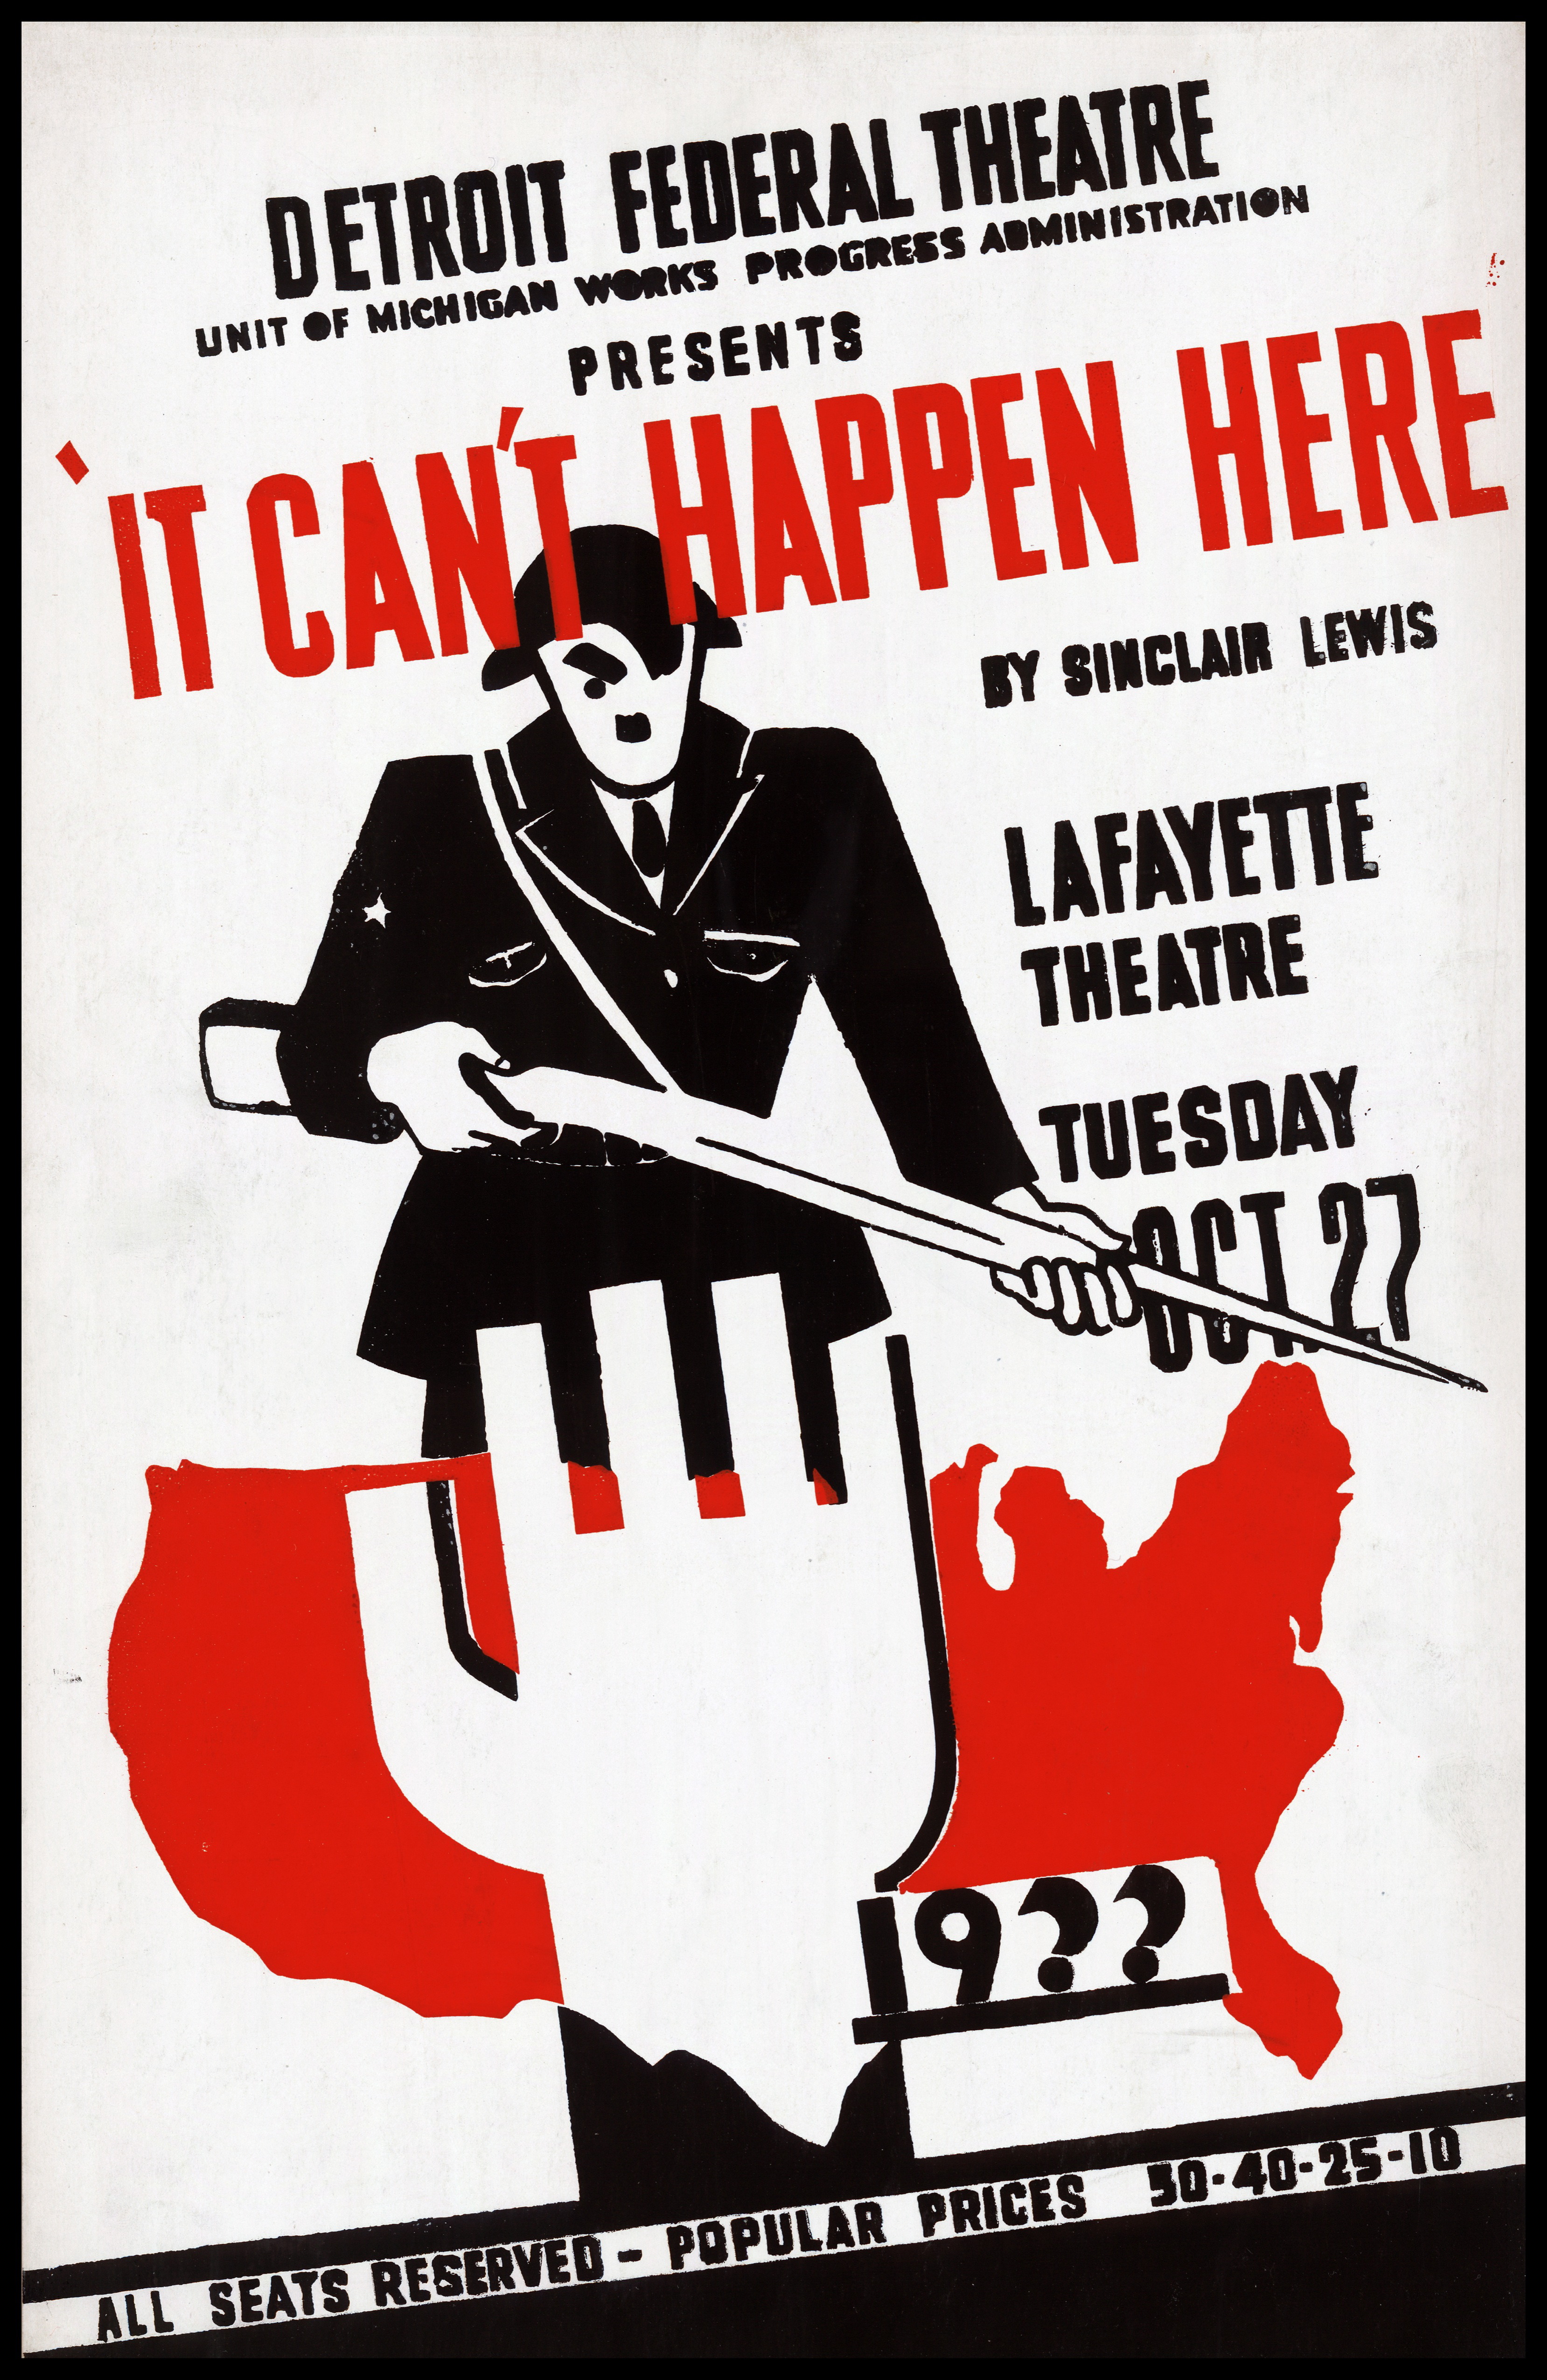 Detroit Federal Theatre Units "It can't happen here".